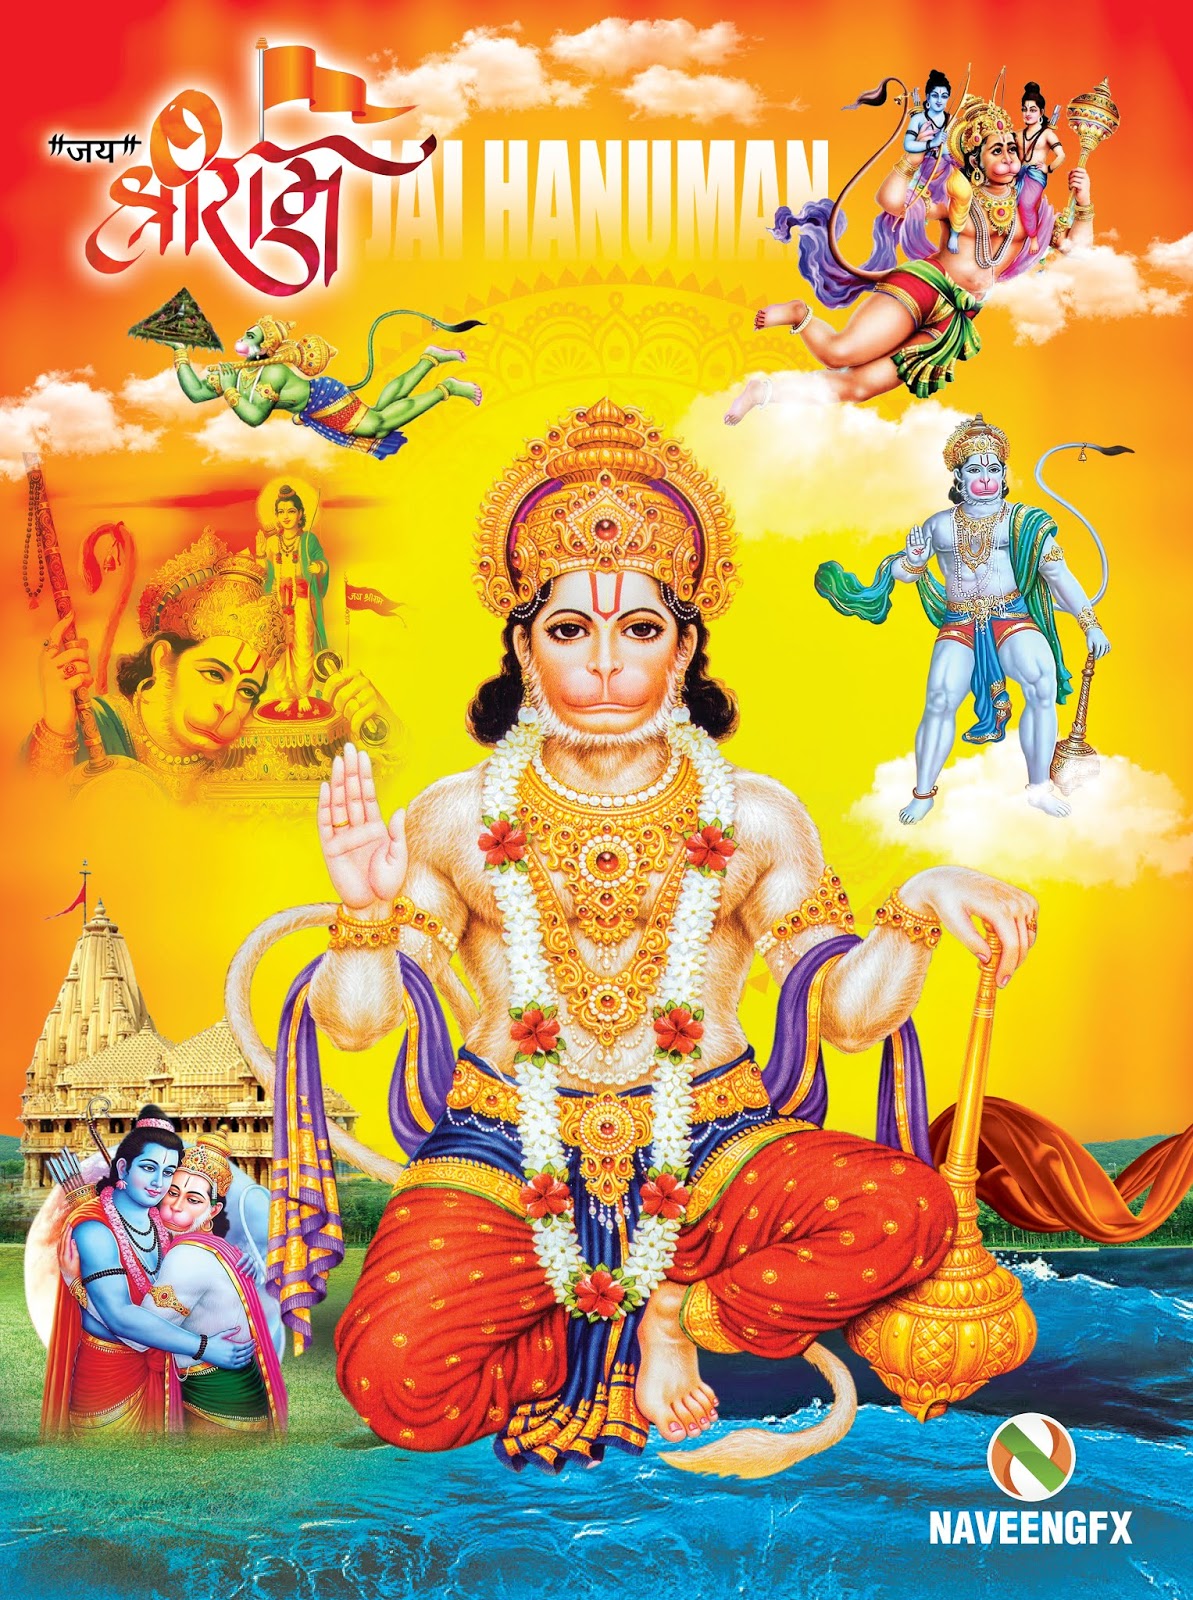 Lord hanuman hd poster design with lord sri rama images | naveengfx